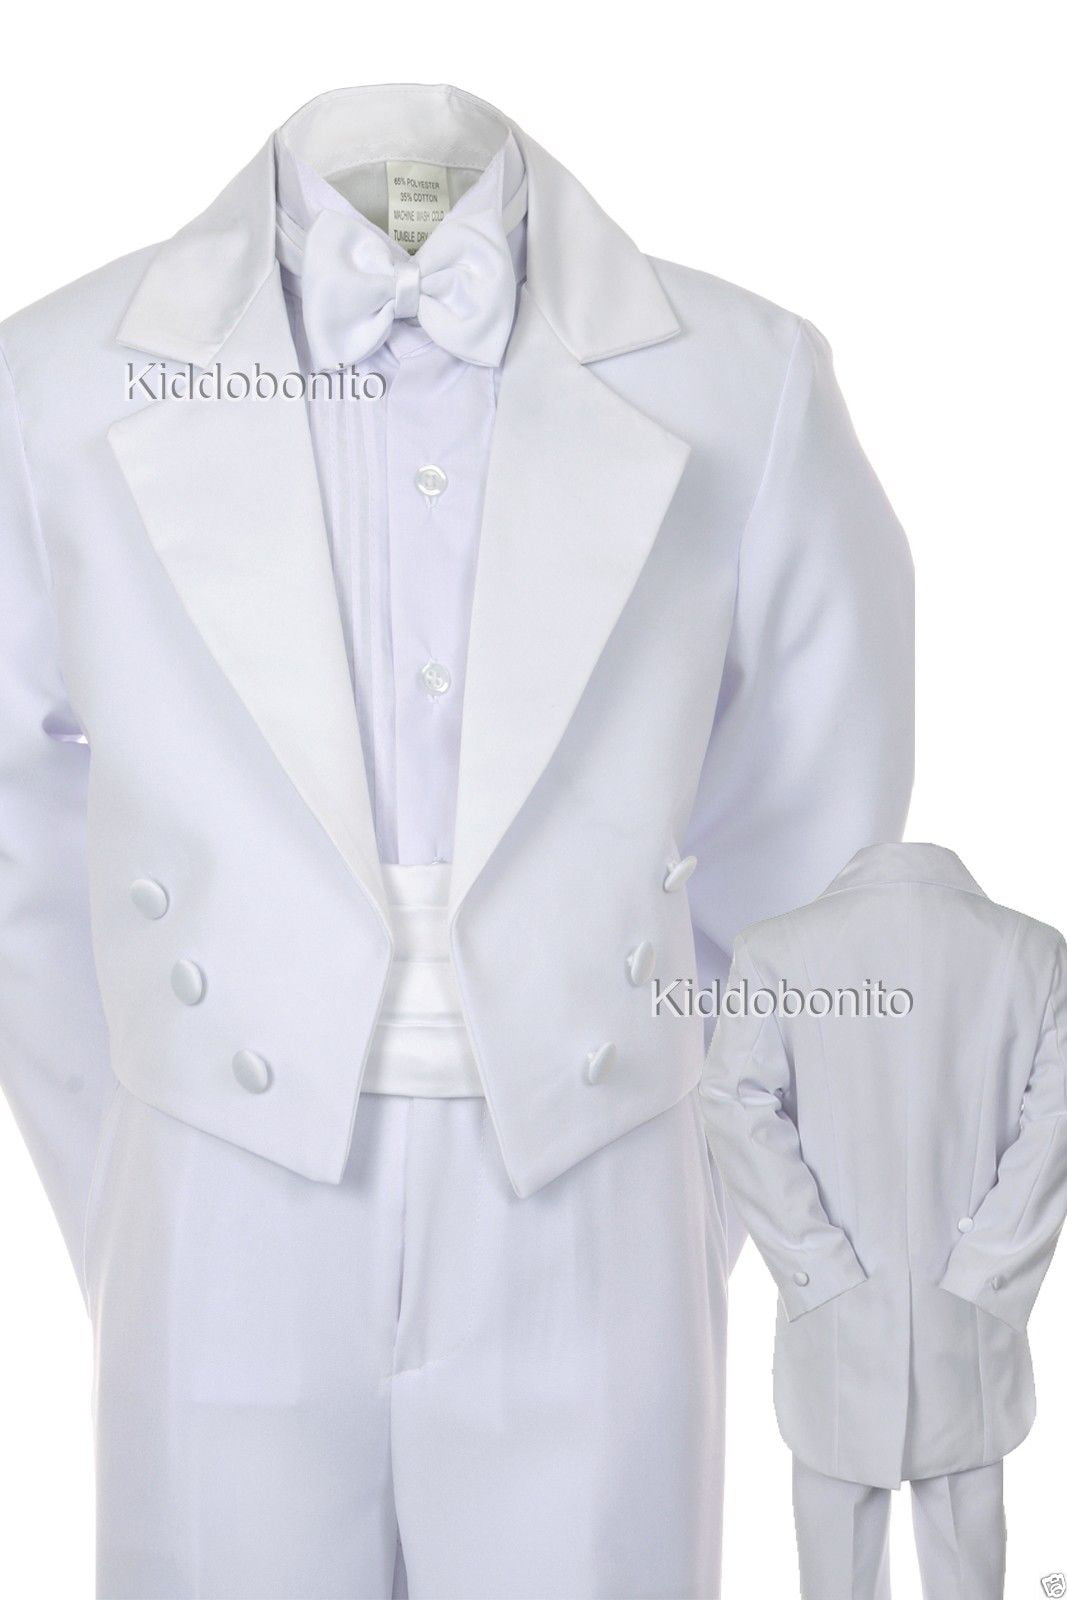 Baby Toddler Kid Teen 1st Communion Wedding Formal White Tuxedo Boy Suit sz S-20 